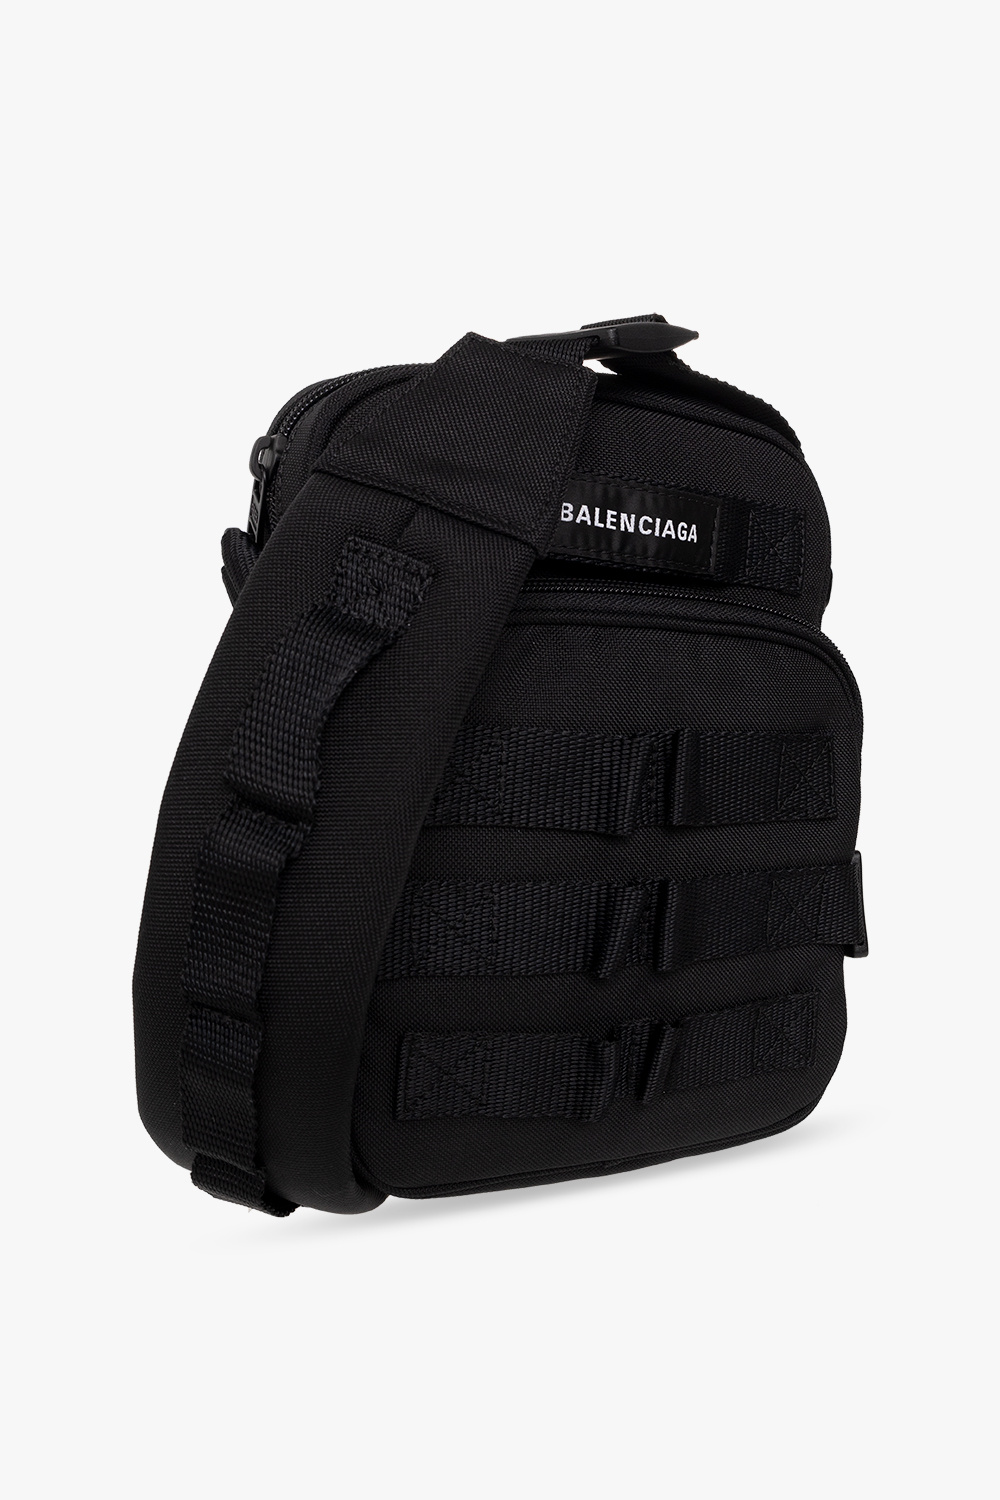 Balenciaga ‘Army’ shoulder Chain bag